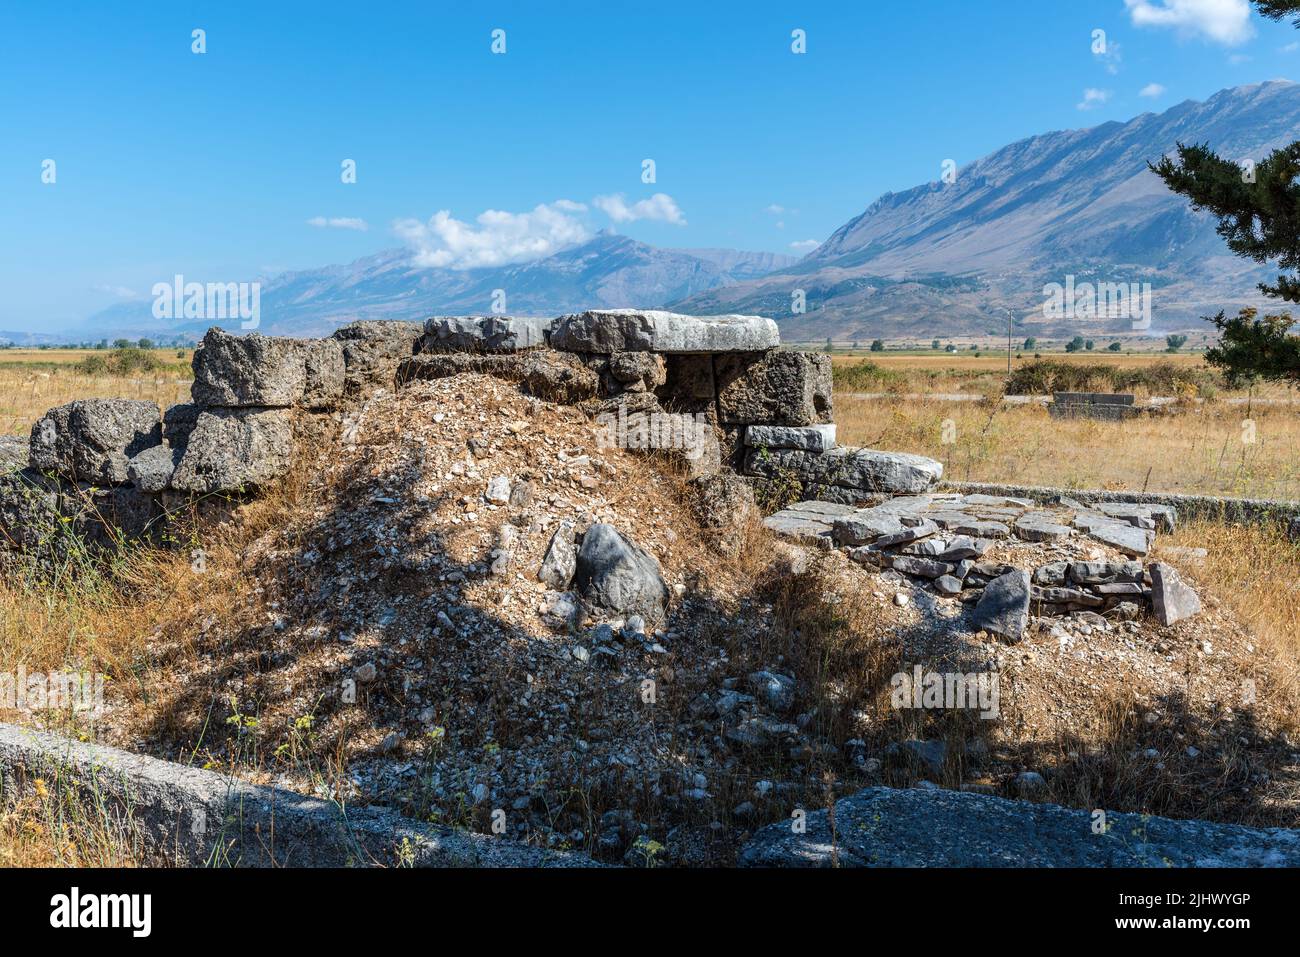 Jorgucat, Albania - 10 de septiembre de 2021: Tumba romana imperadora cerca del pueblo Jorgucat. Destino religioso en Albania. Foto de stock